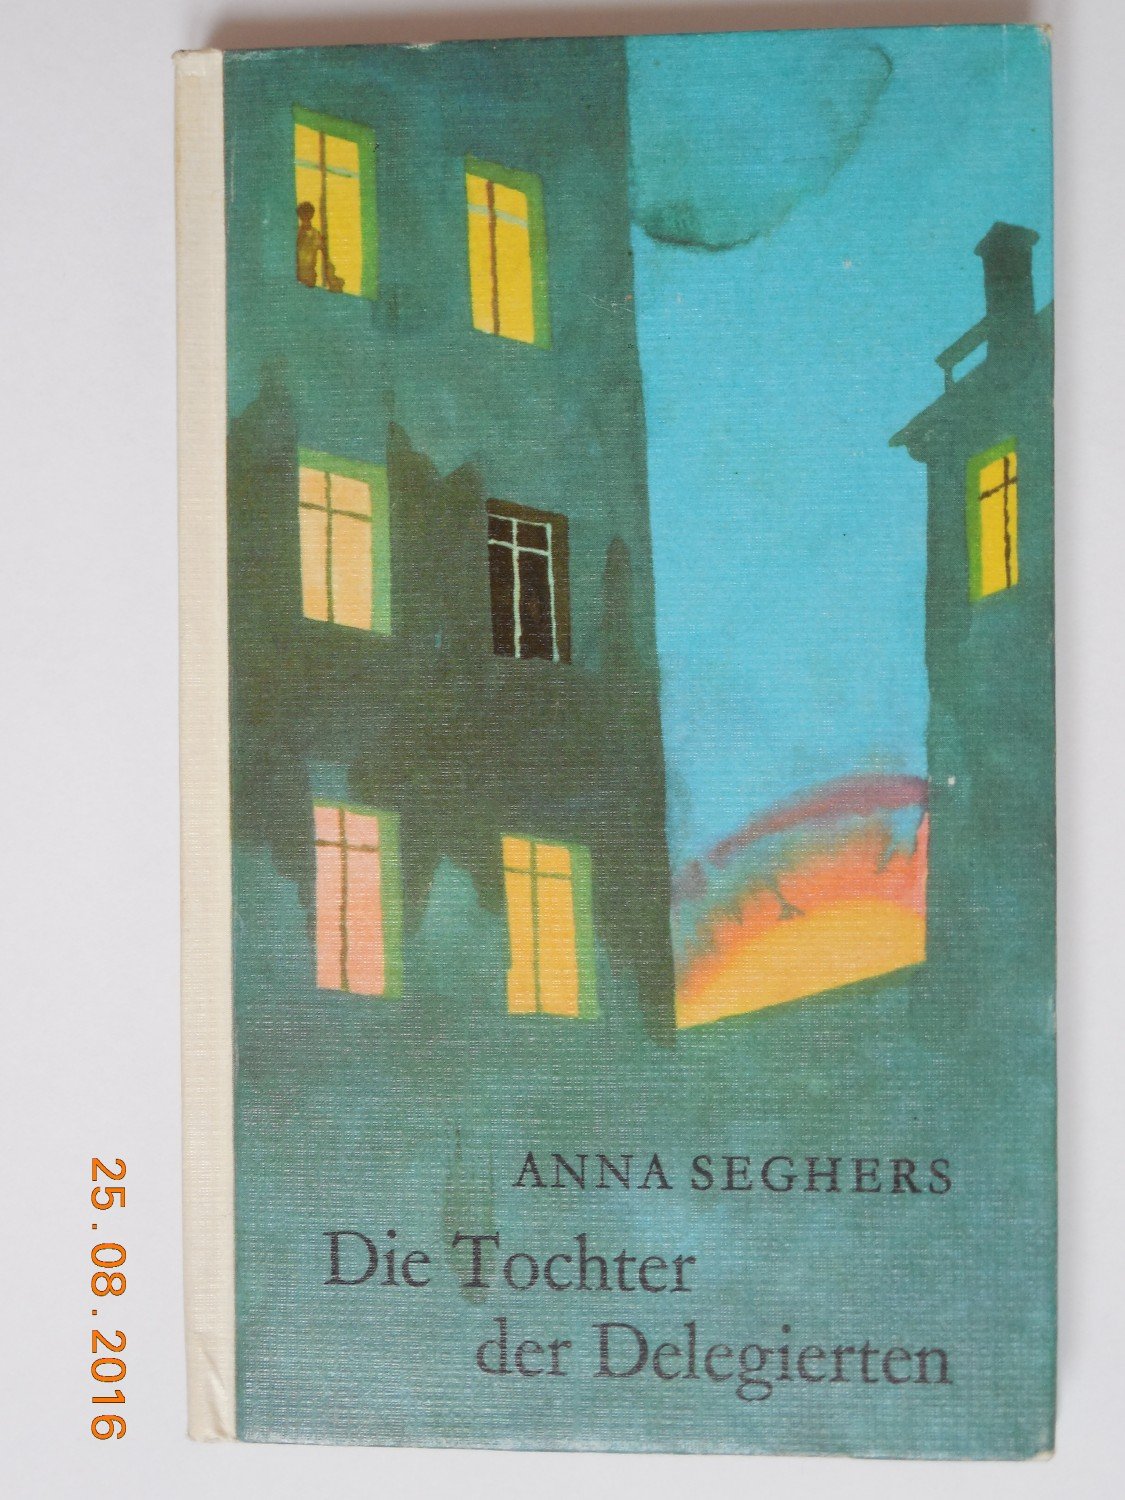 Доклад по теме “Das Obdach” nach Anna Seghers